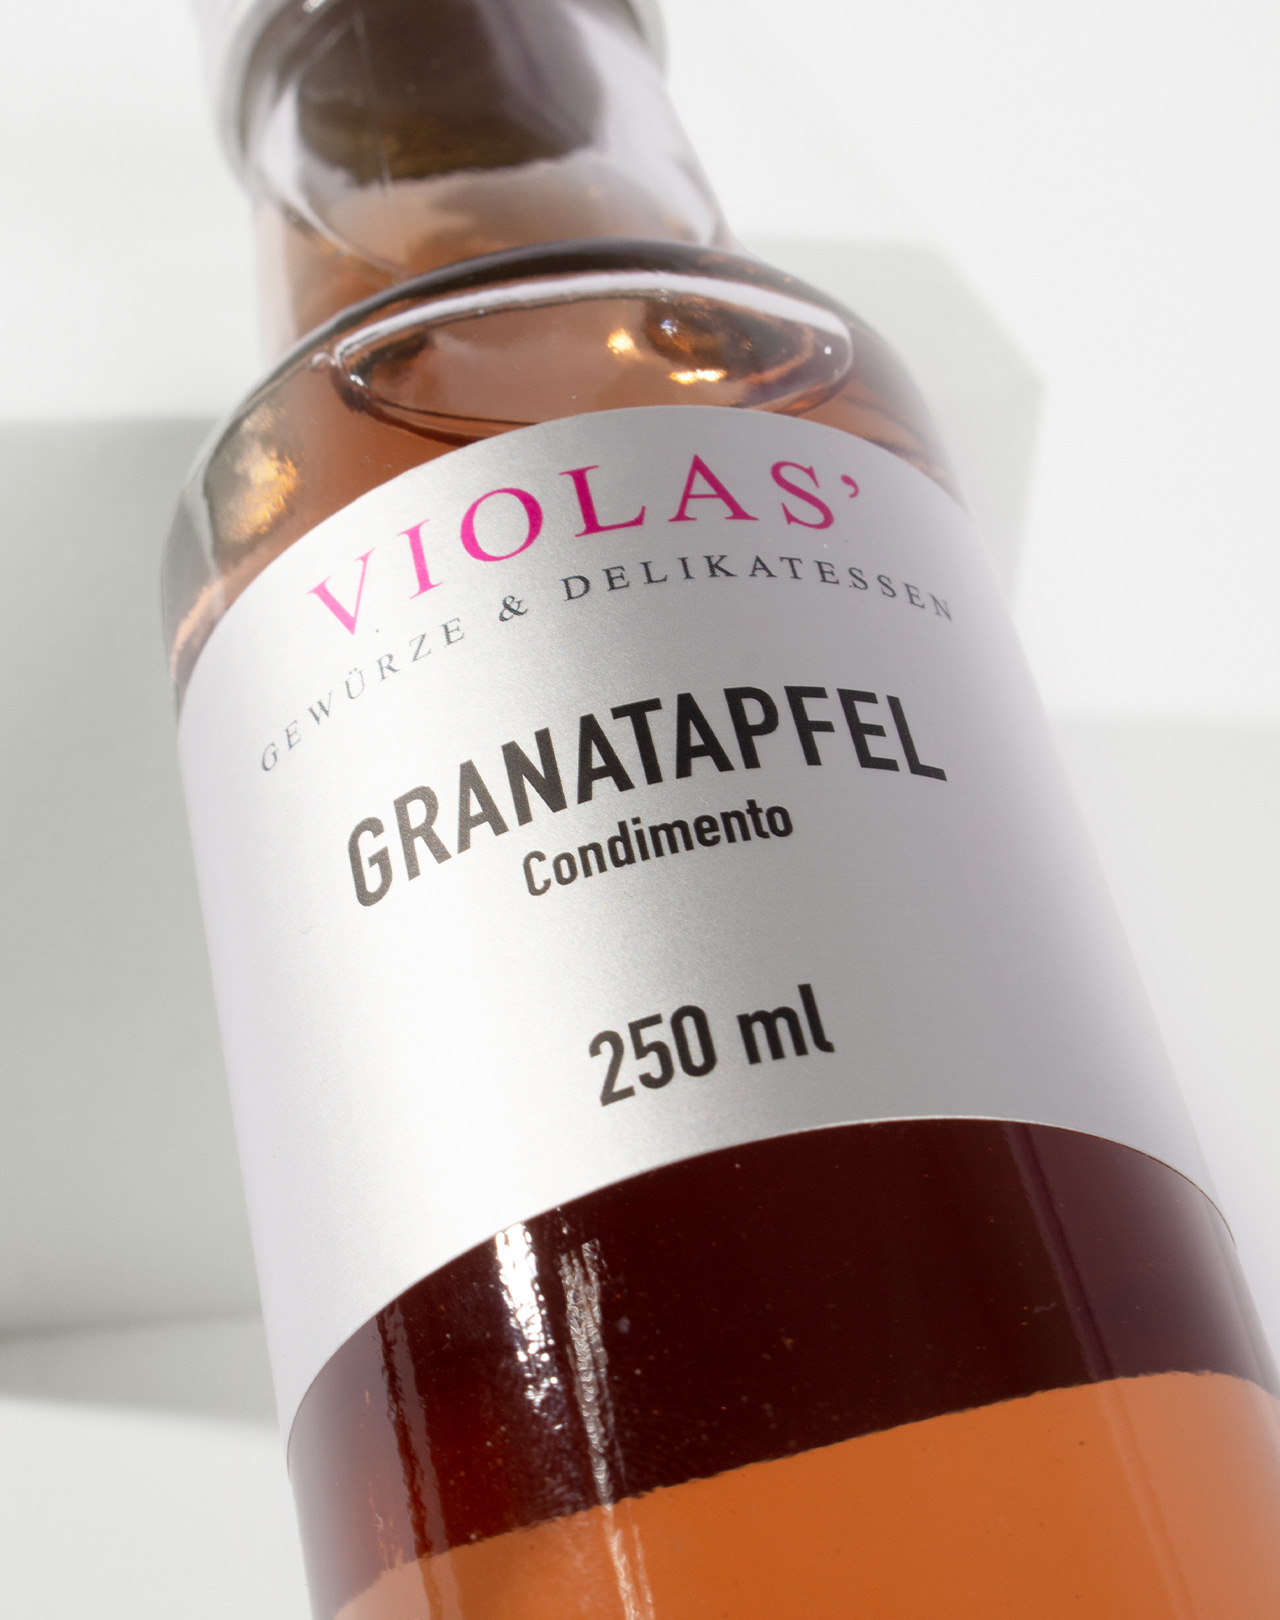 VIOLAS’ Granatapfel